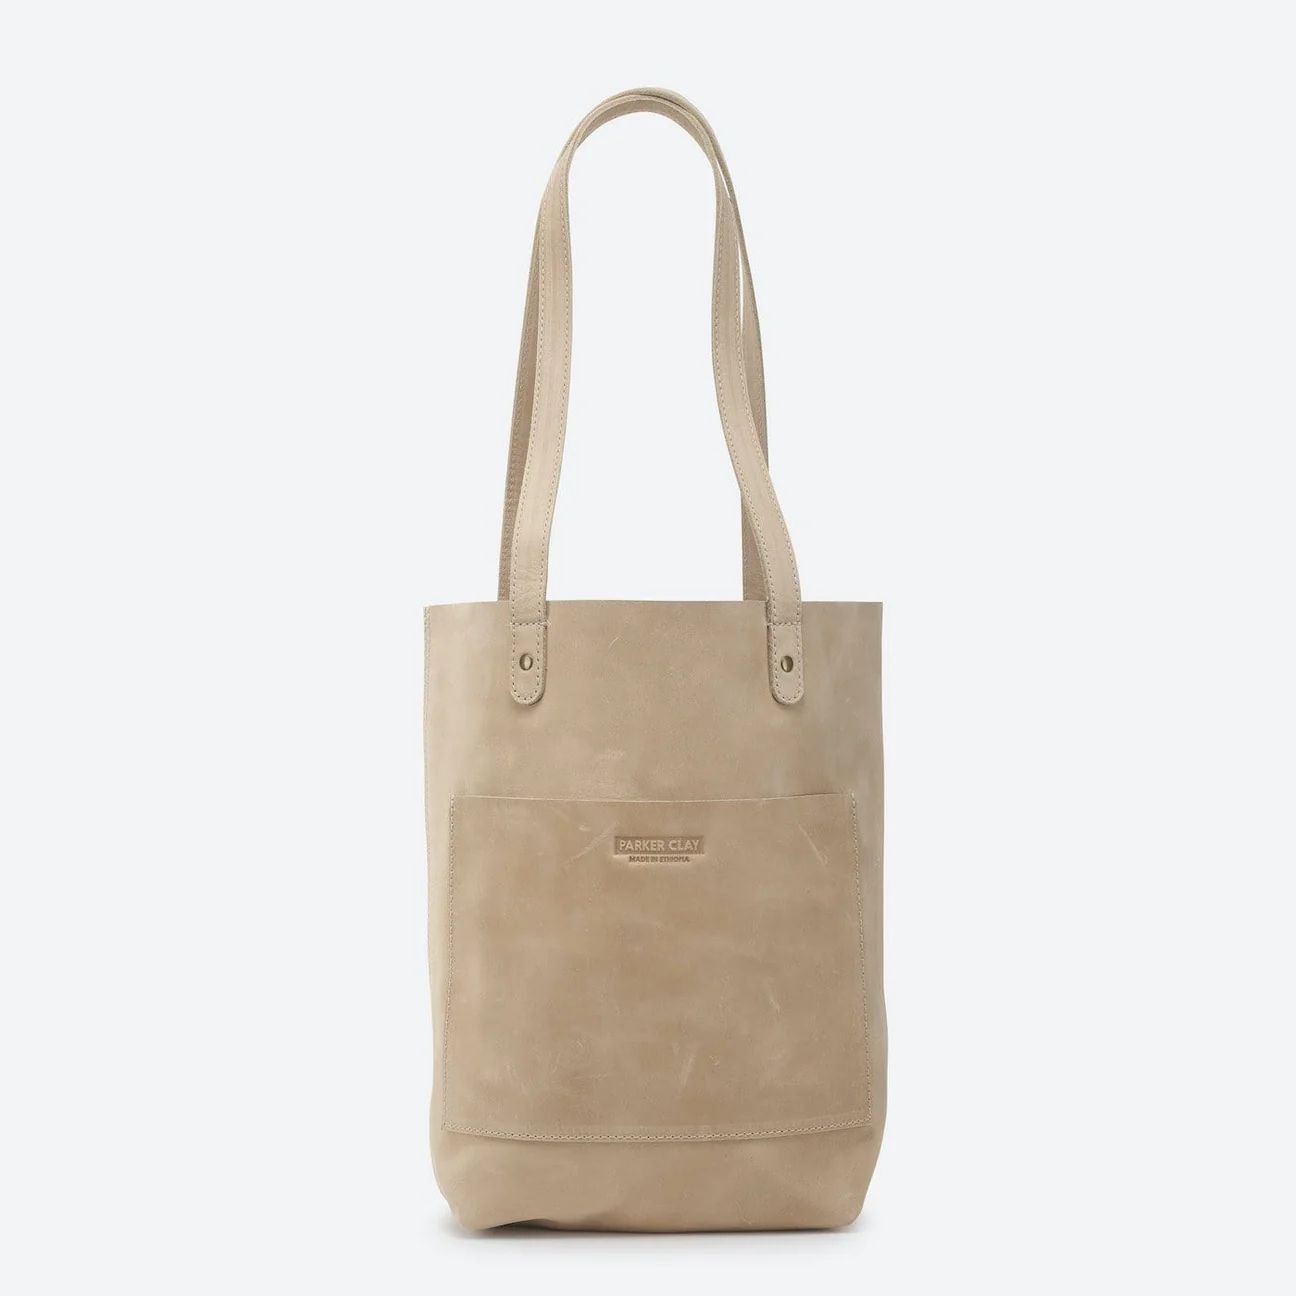 Caroline Leather Tote Bag | Parker Clay